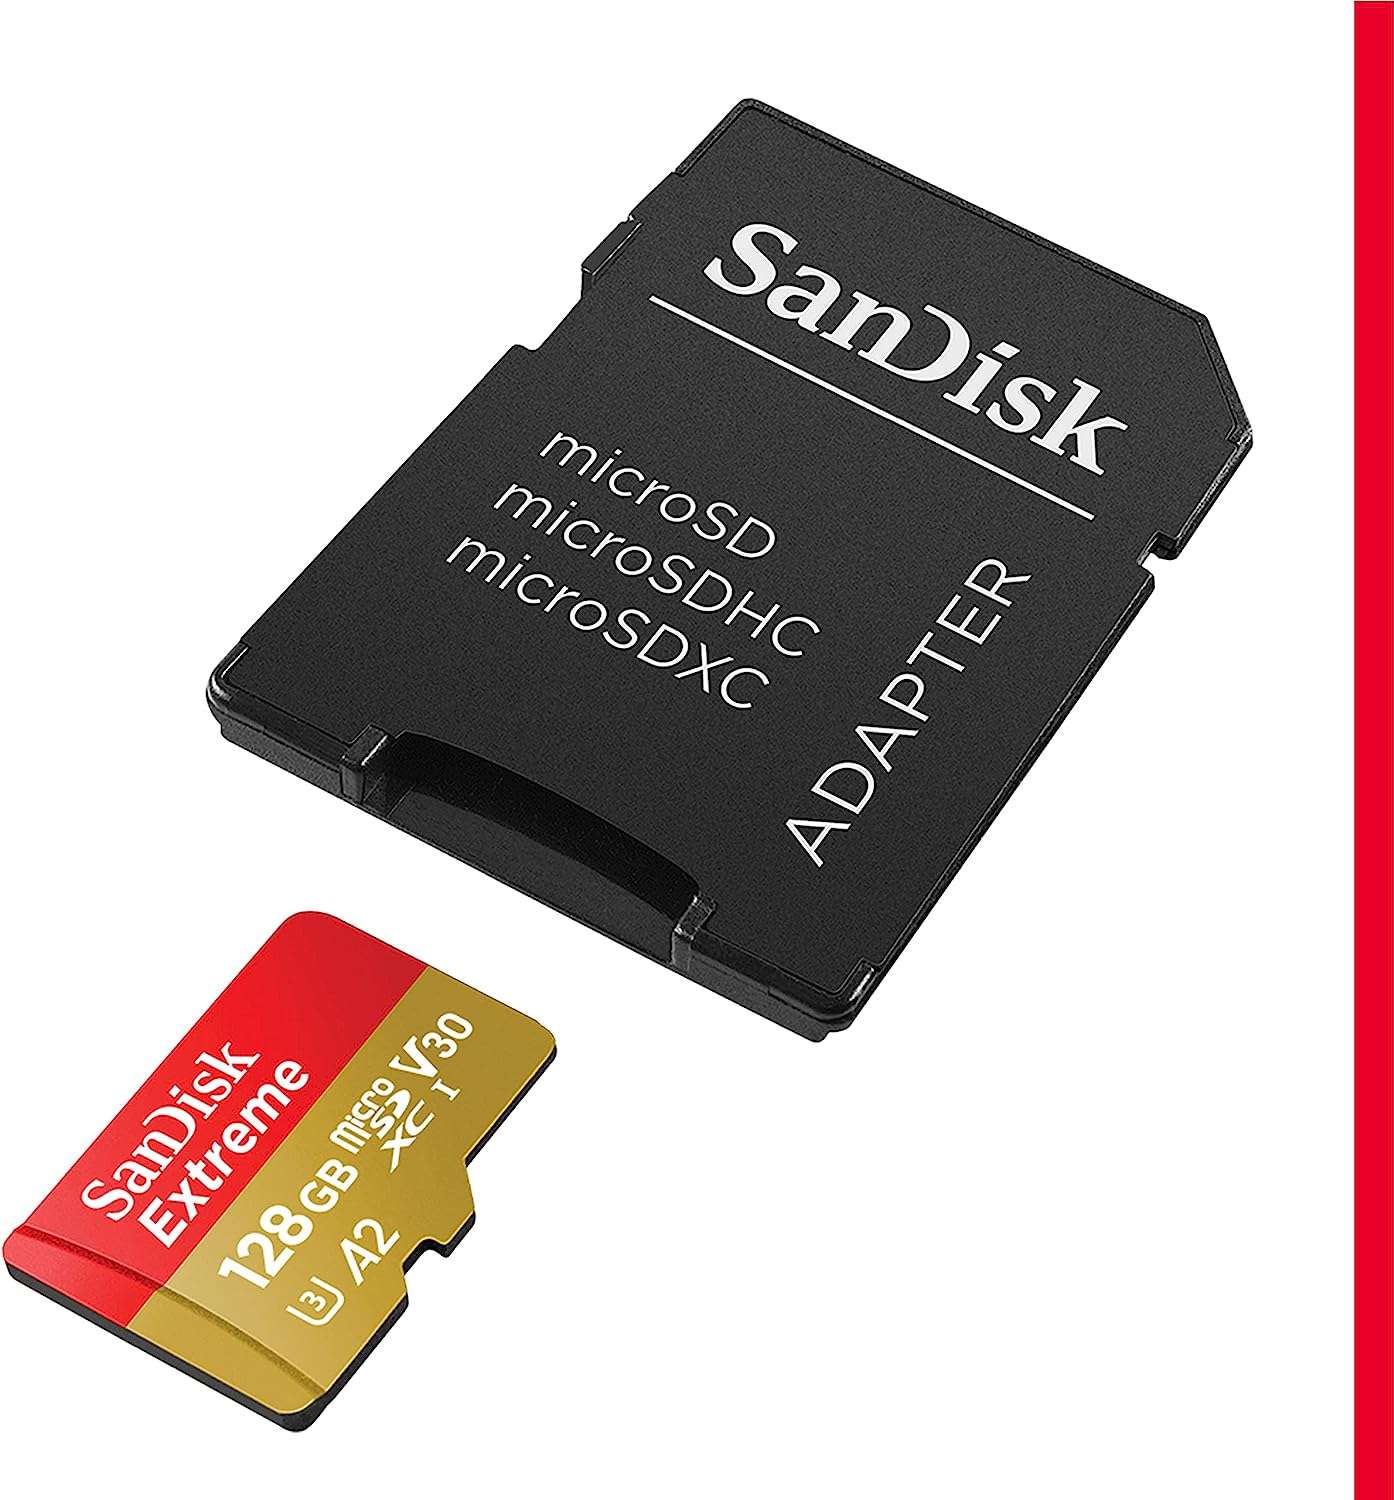 SanDisk Extreme microSDXC 128 GB SD Karte + Adapter